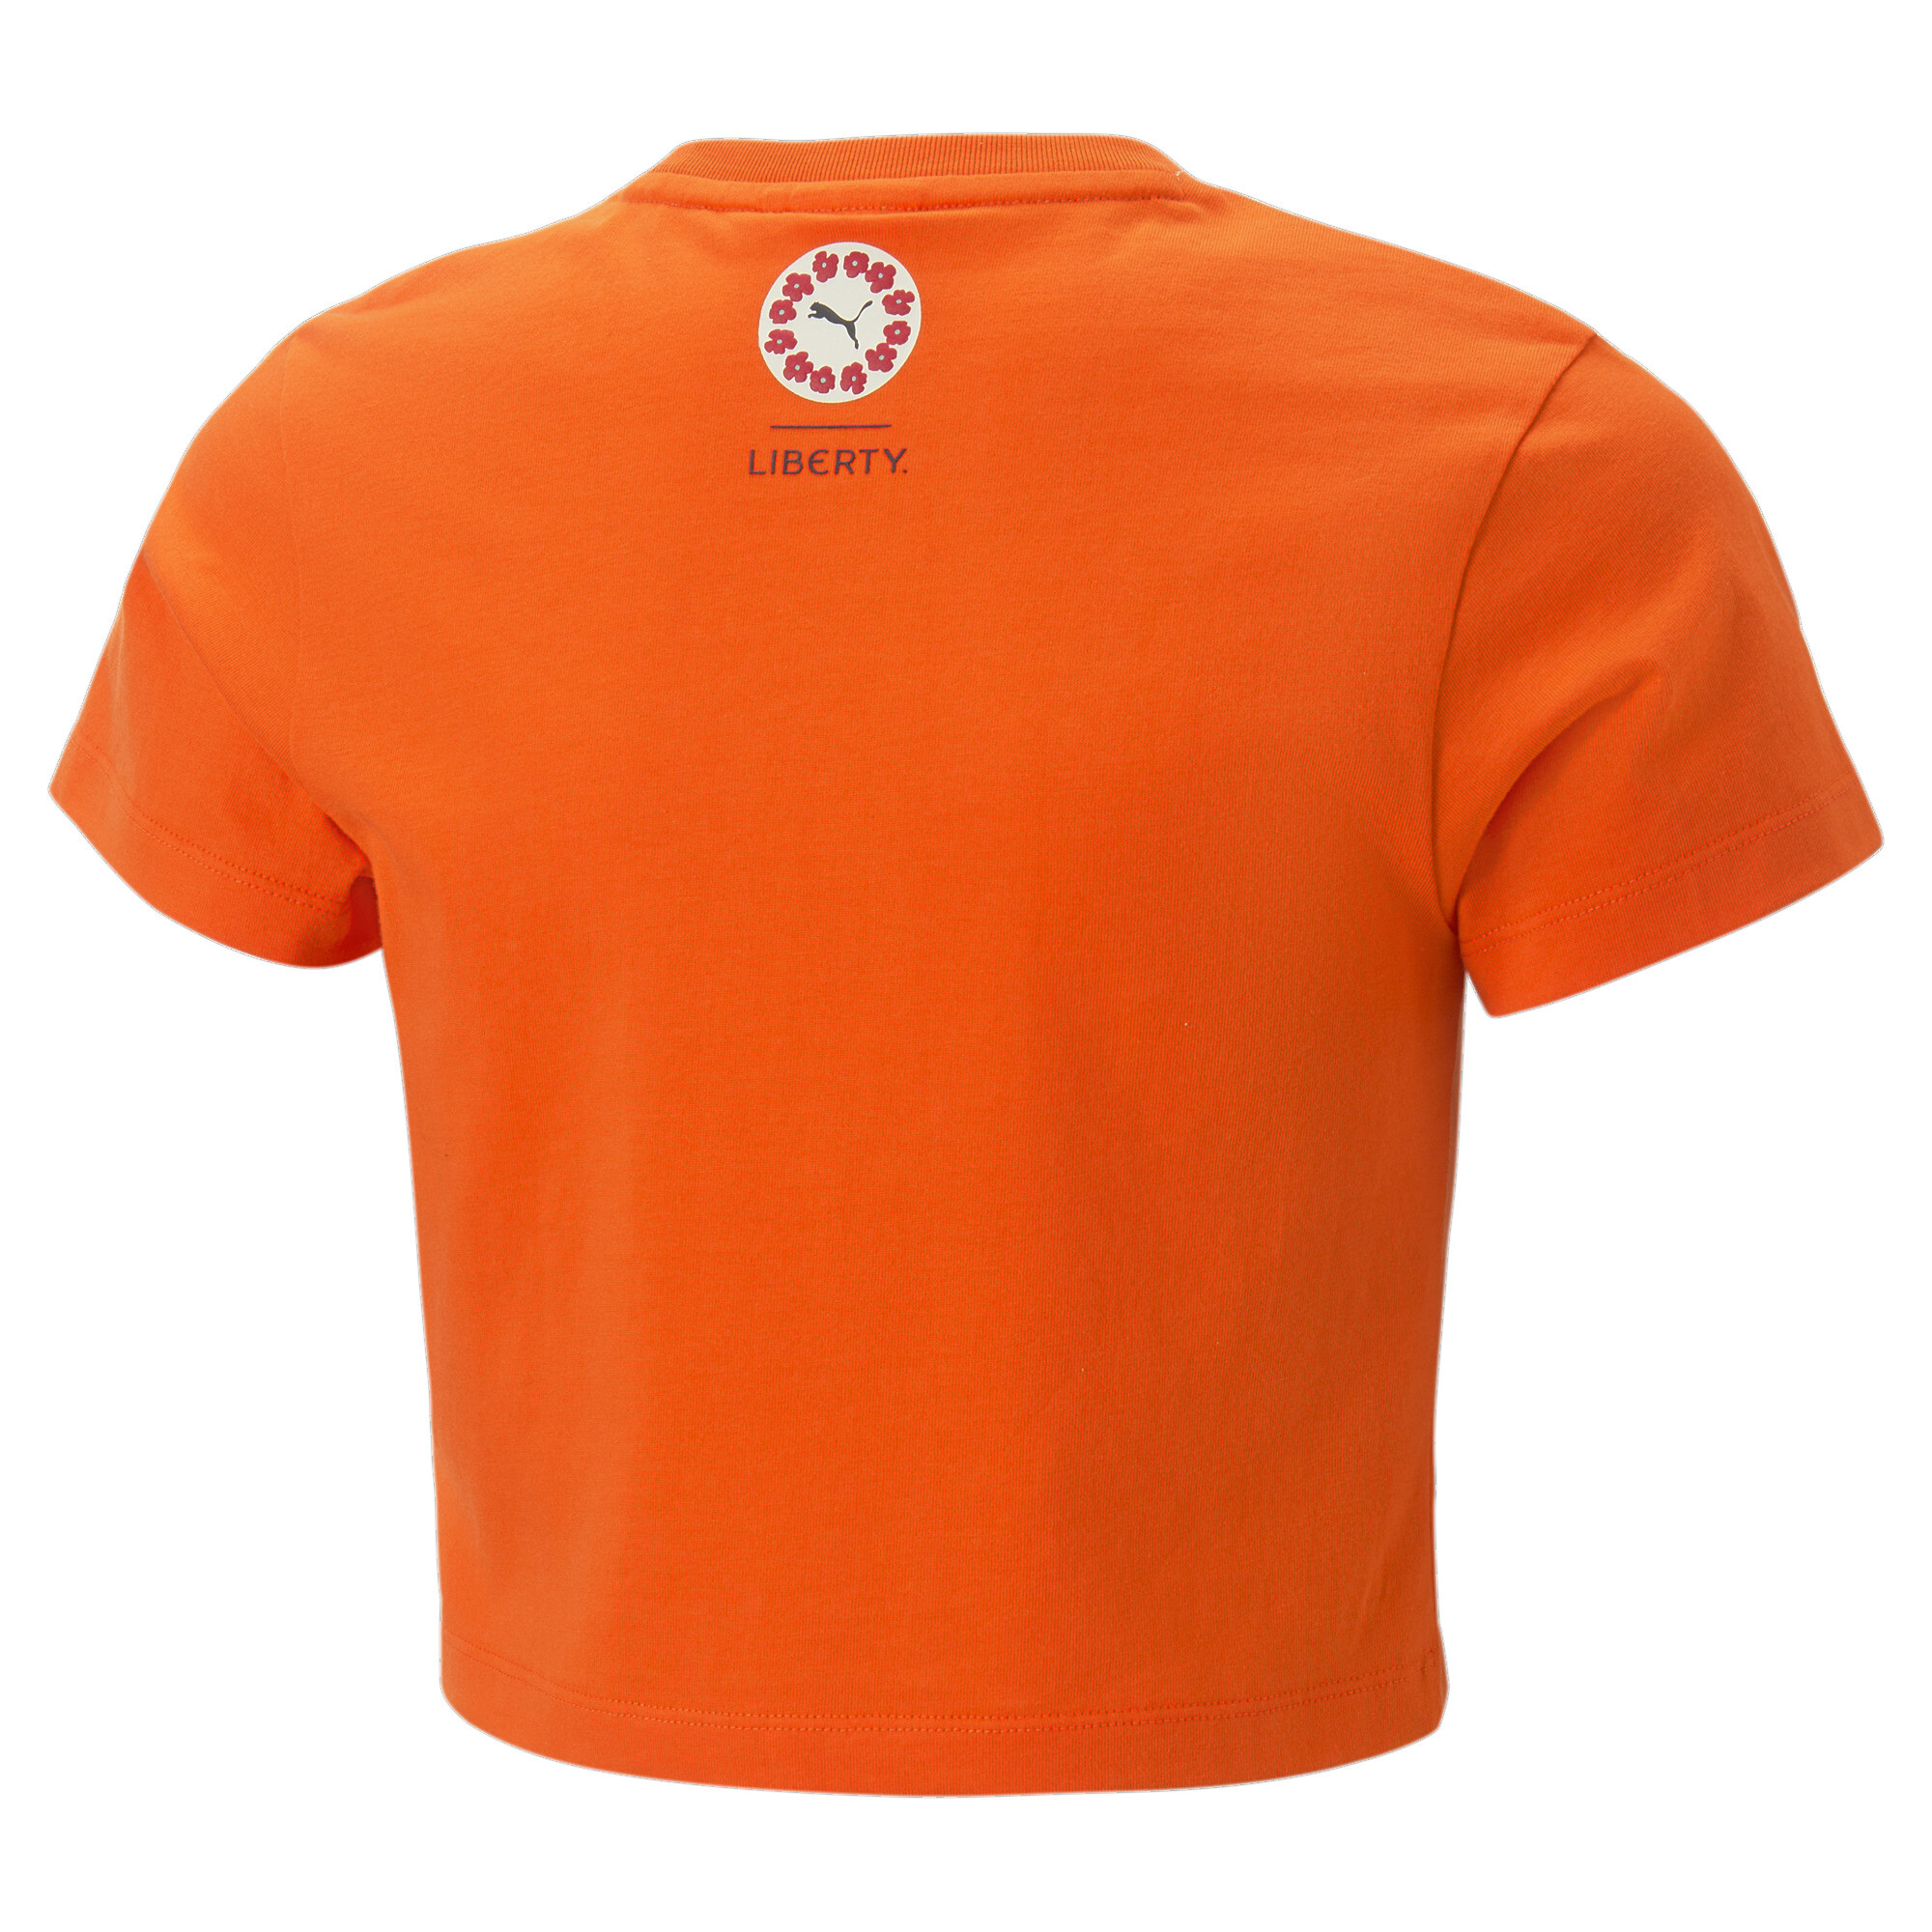 PUMA X LIBERTY T-Shirt Kids In Orange, Size 2-3 Months